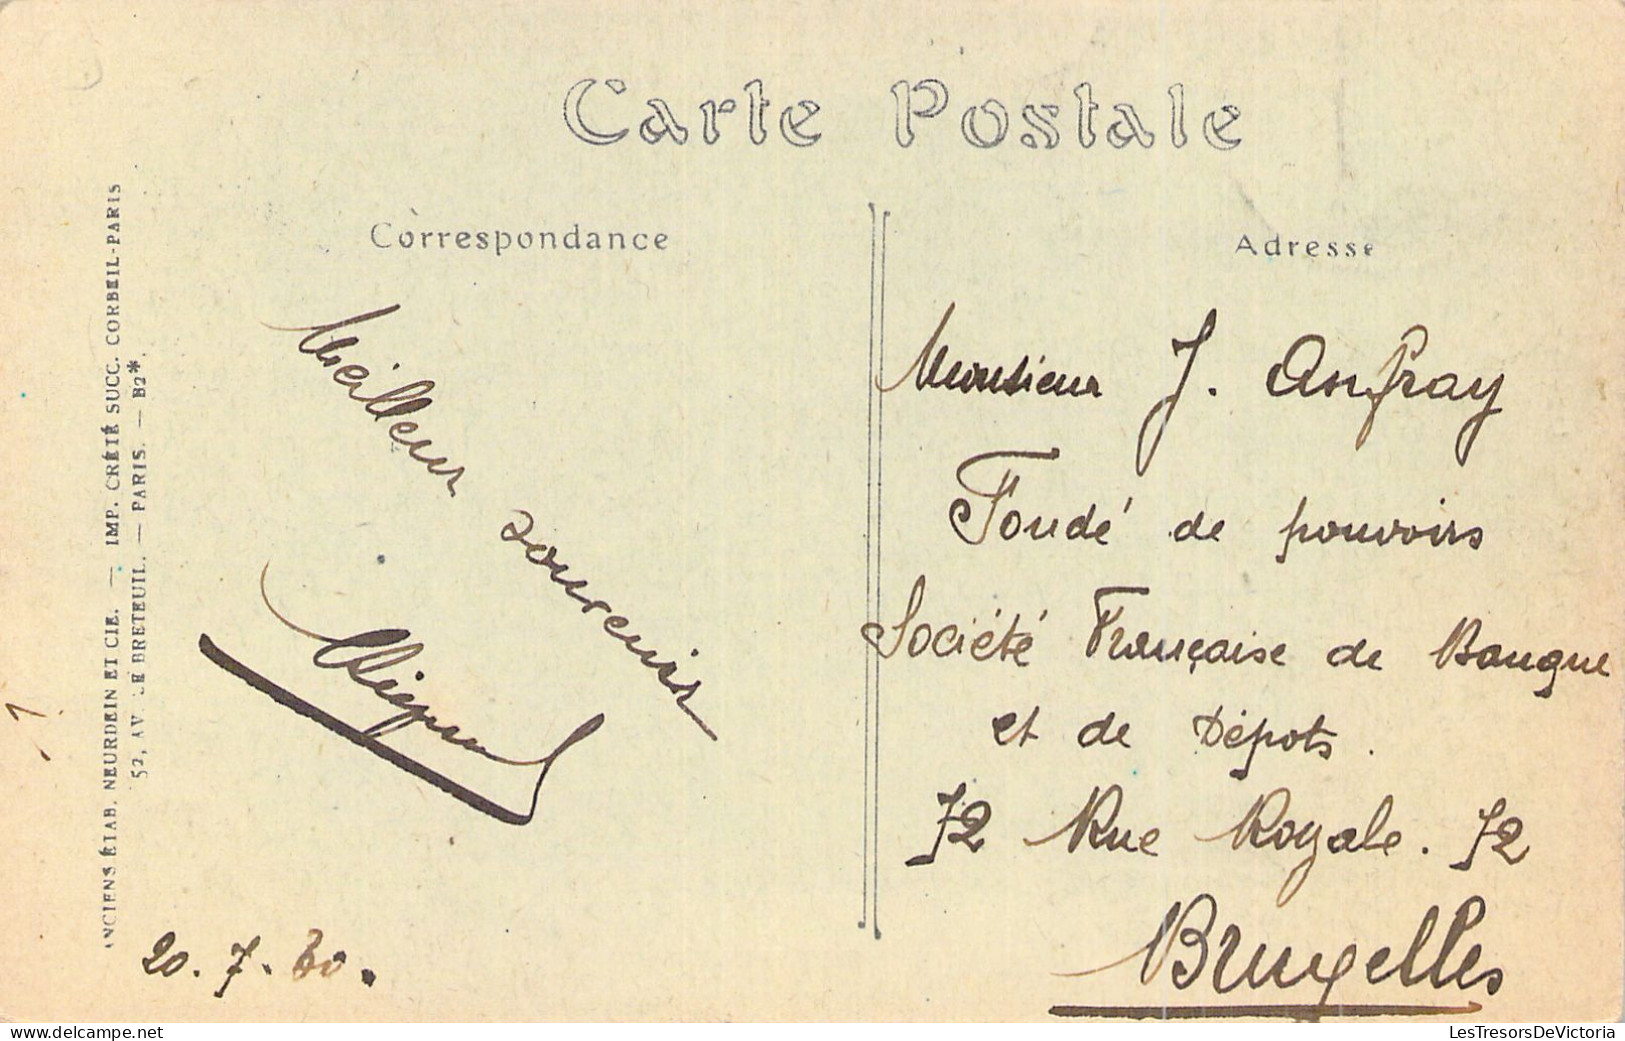 FRANCE - 59 - MAUBEUGE - L'église - Carte Postale Ancienne - Maubeuge